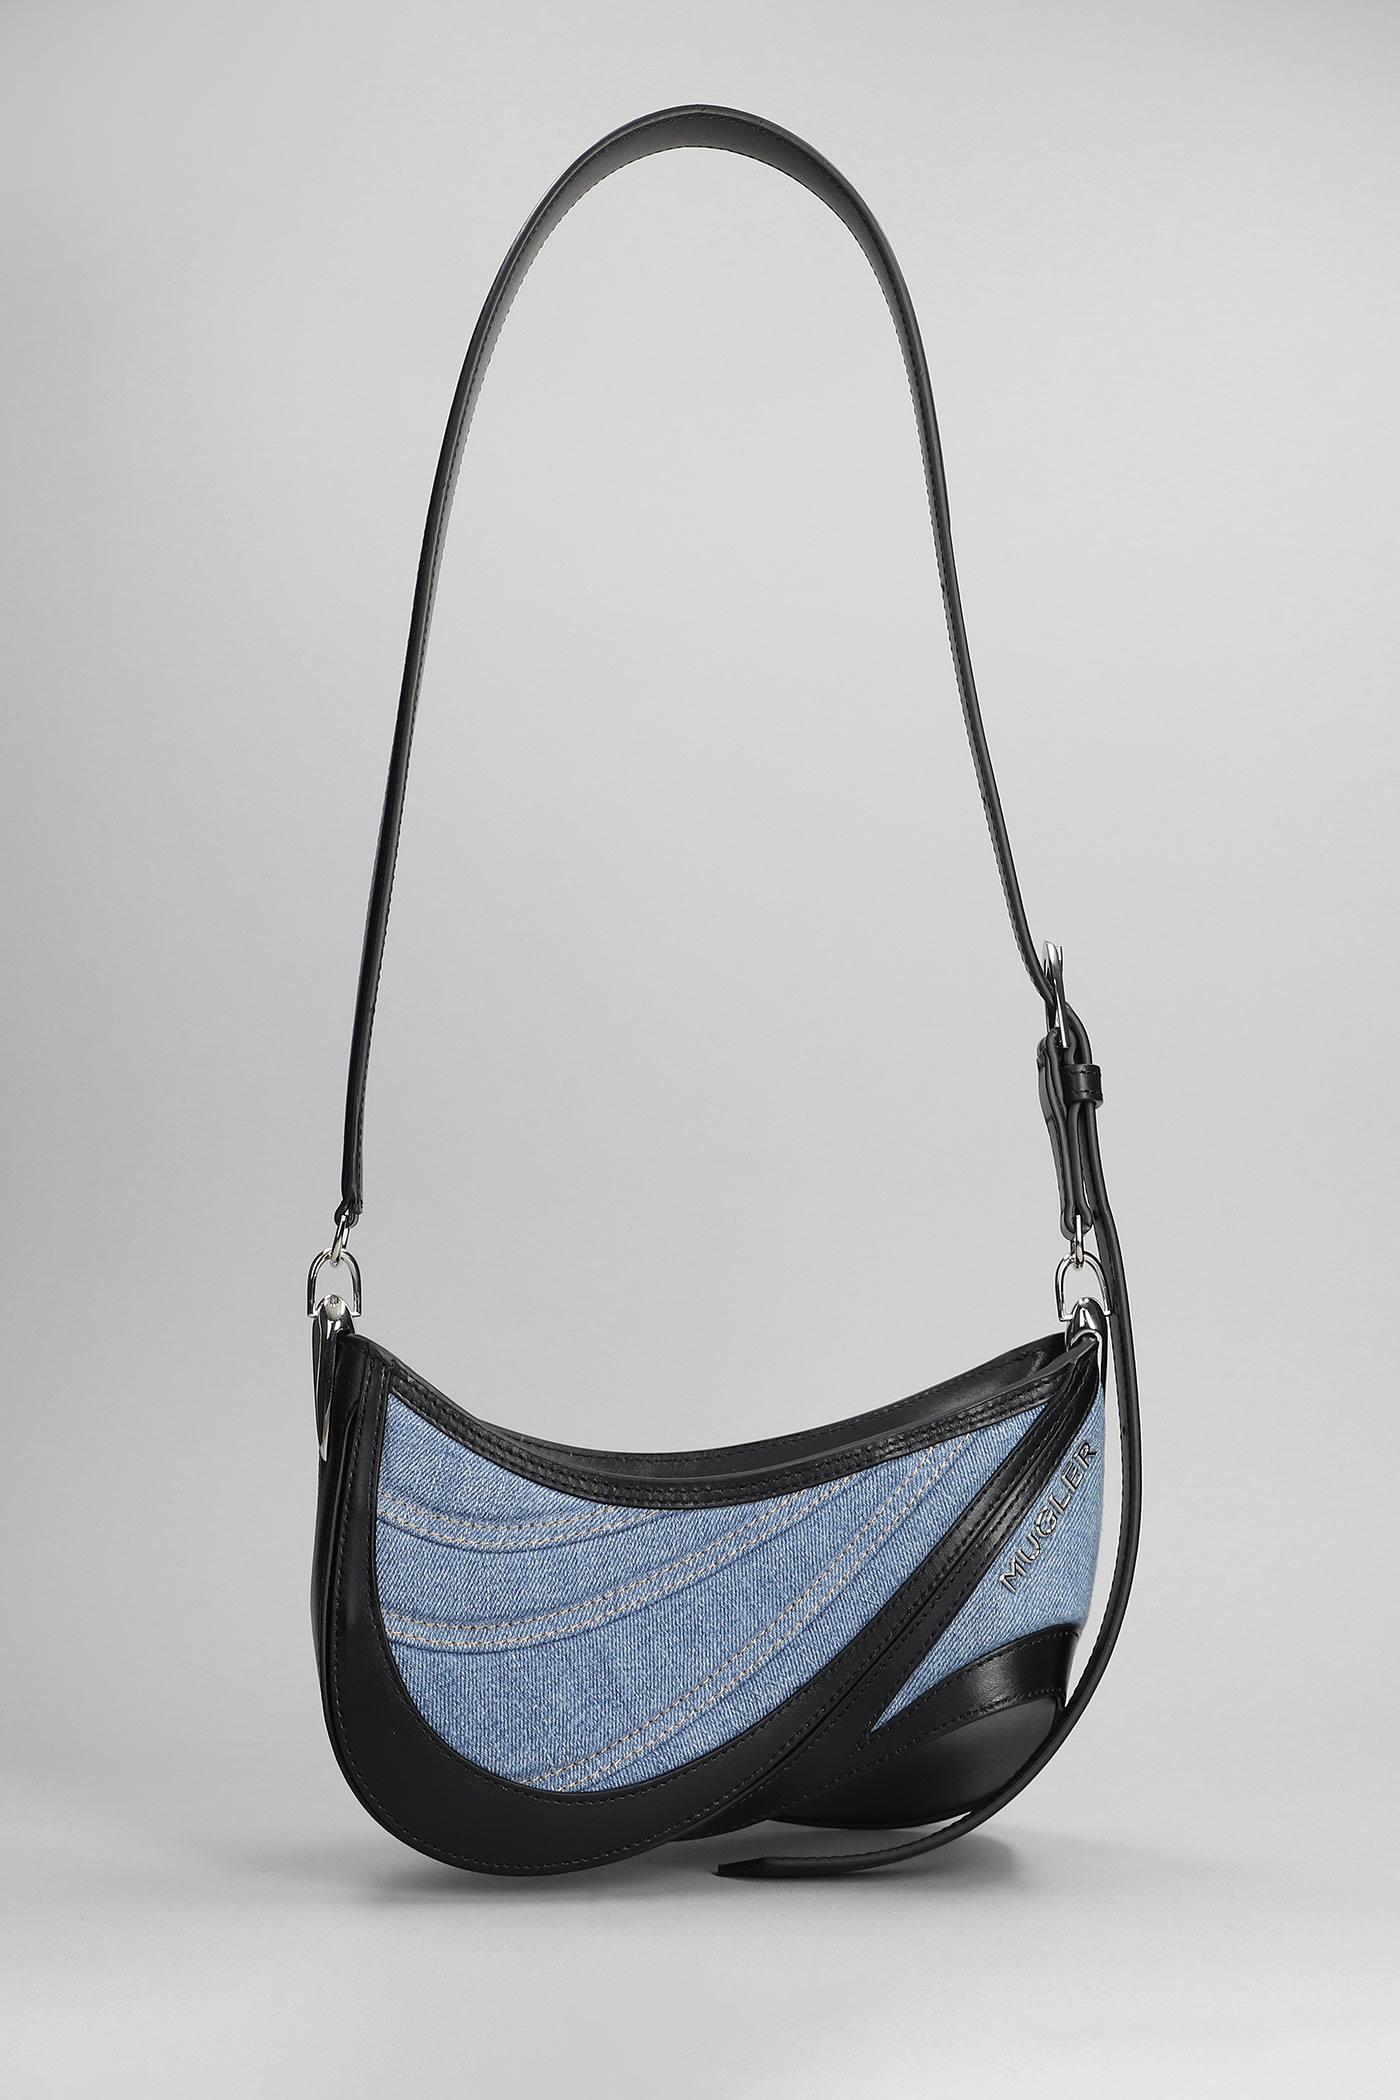 Mugler Shoulder Bag In Blue Leather And Fabric